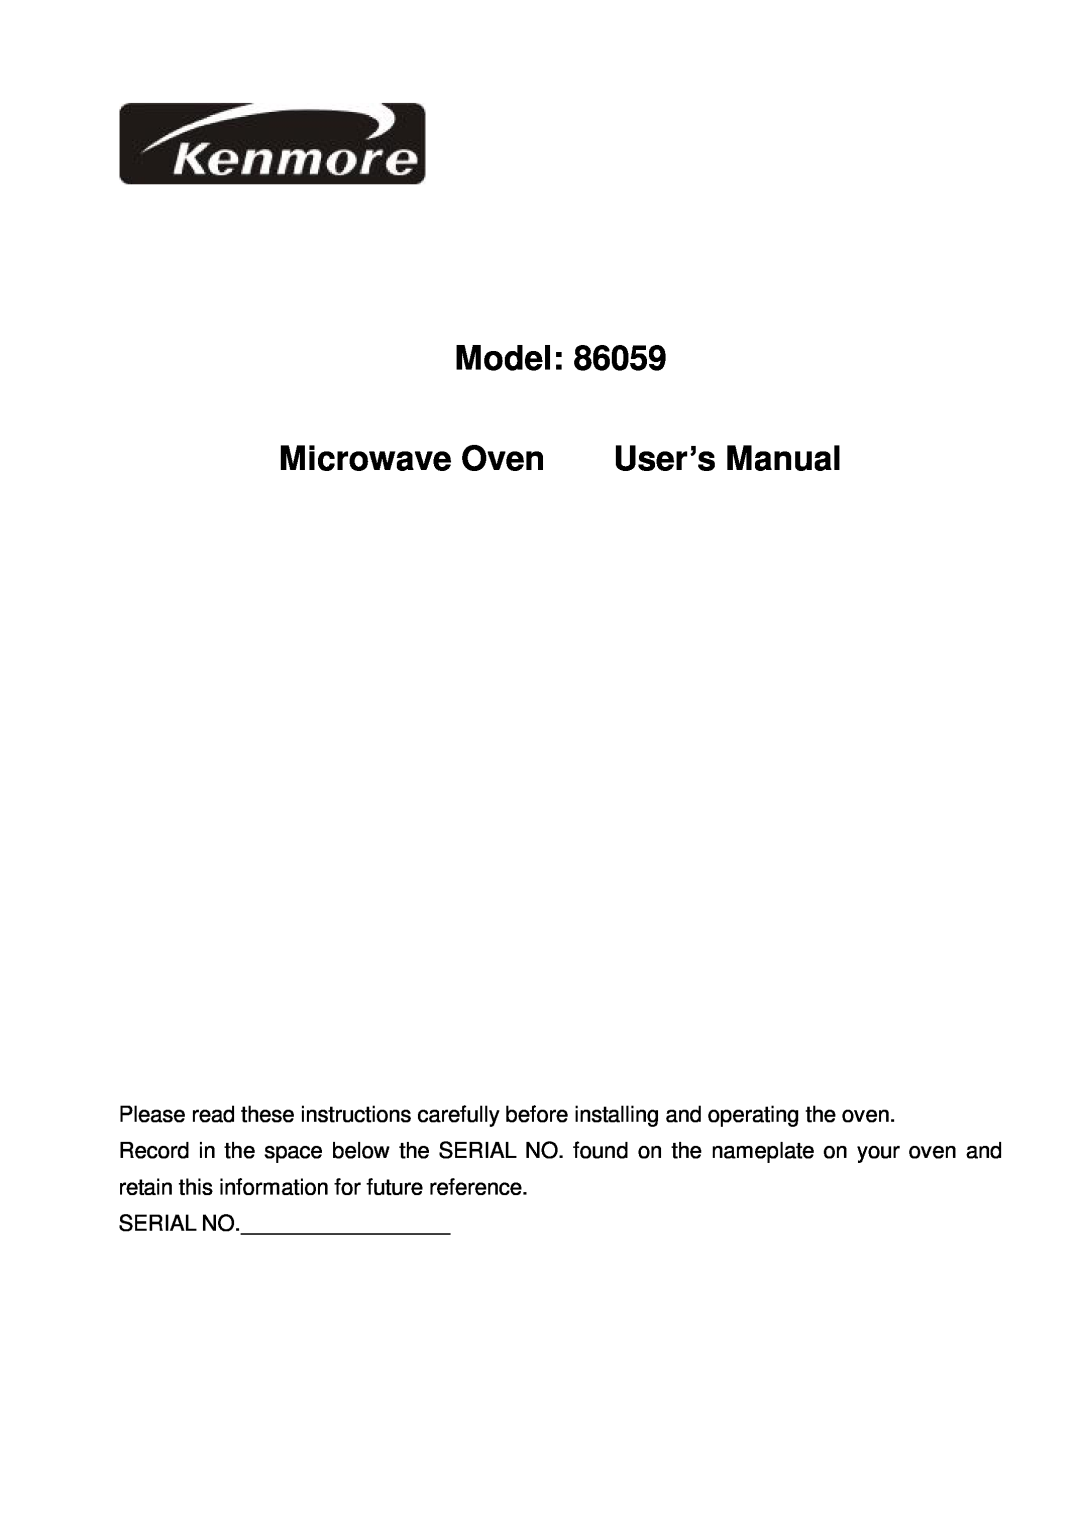 Kenmore 86059 user manual Model, Microwave Oven 